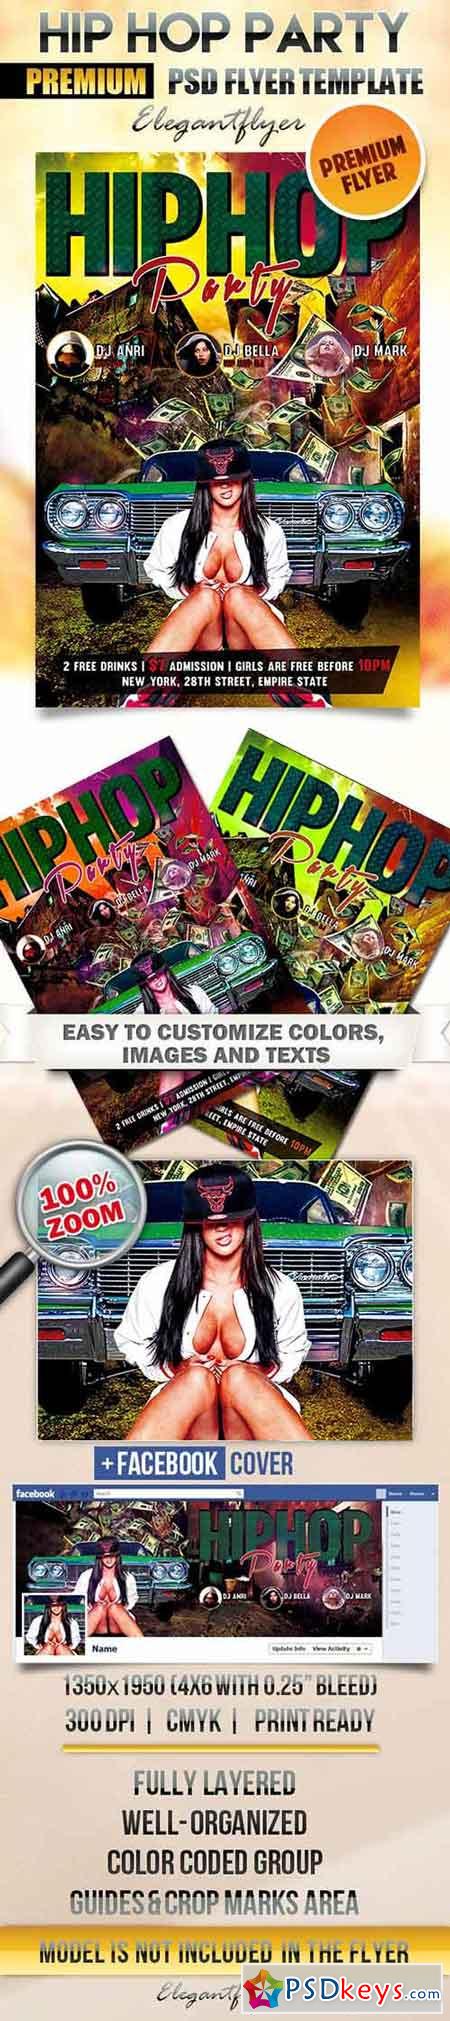 Hip Hop Party Flyer PSD Template + Facebook Cover